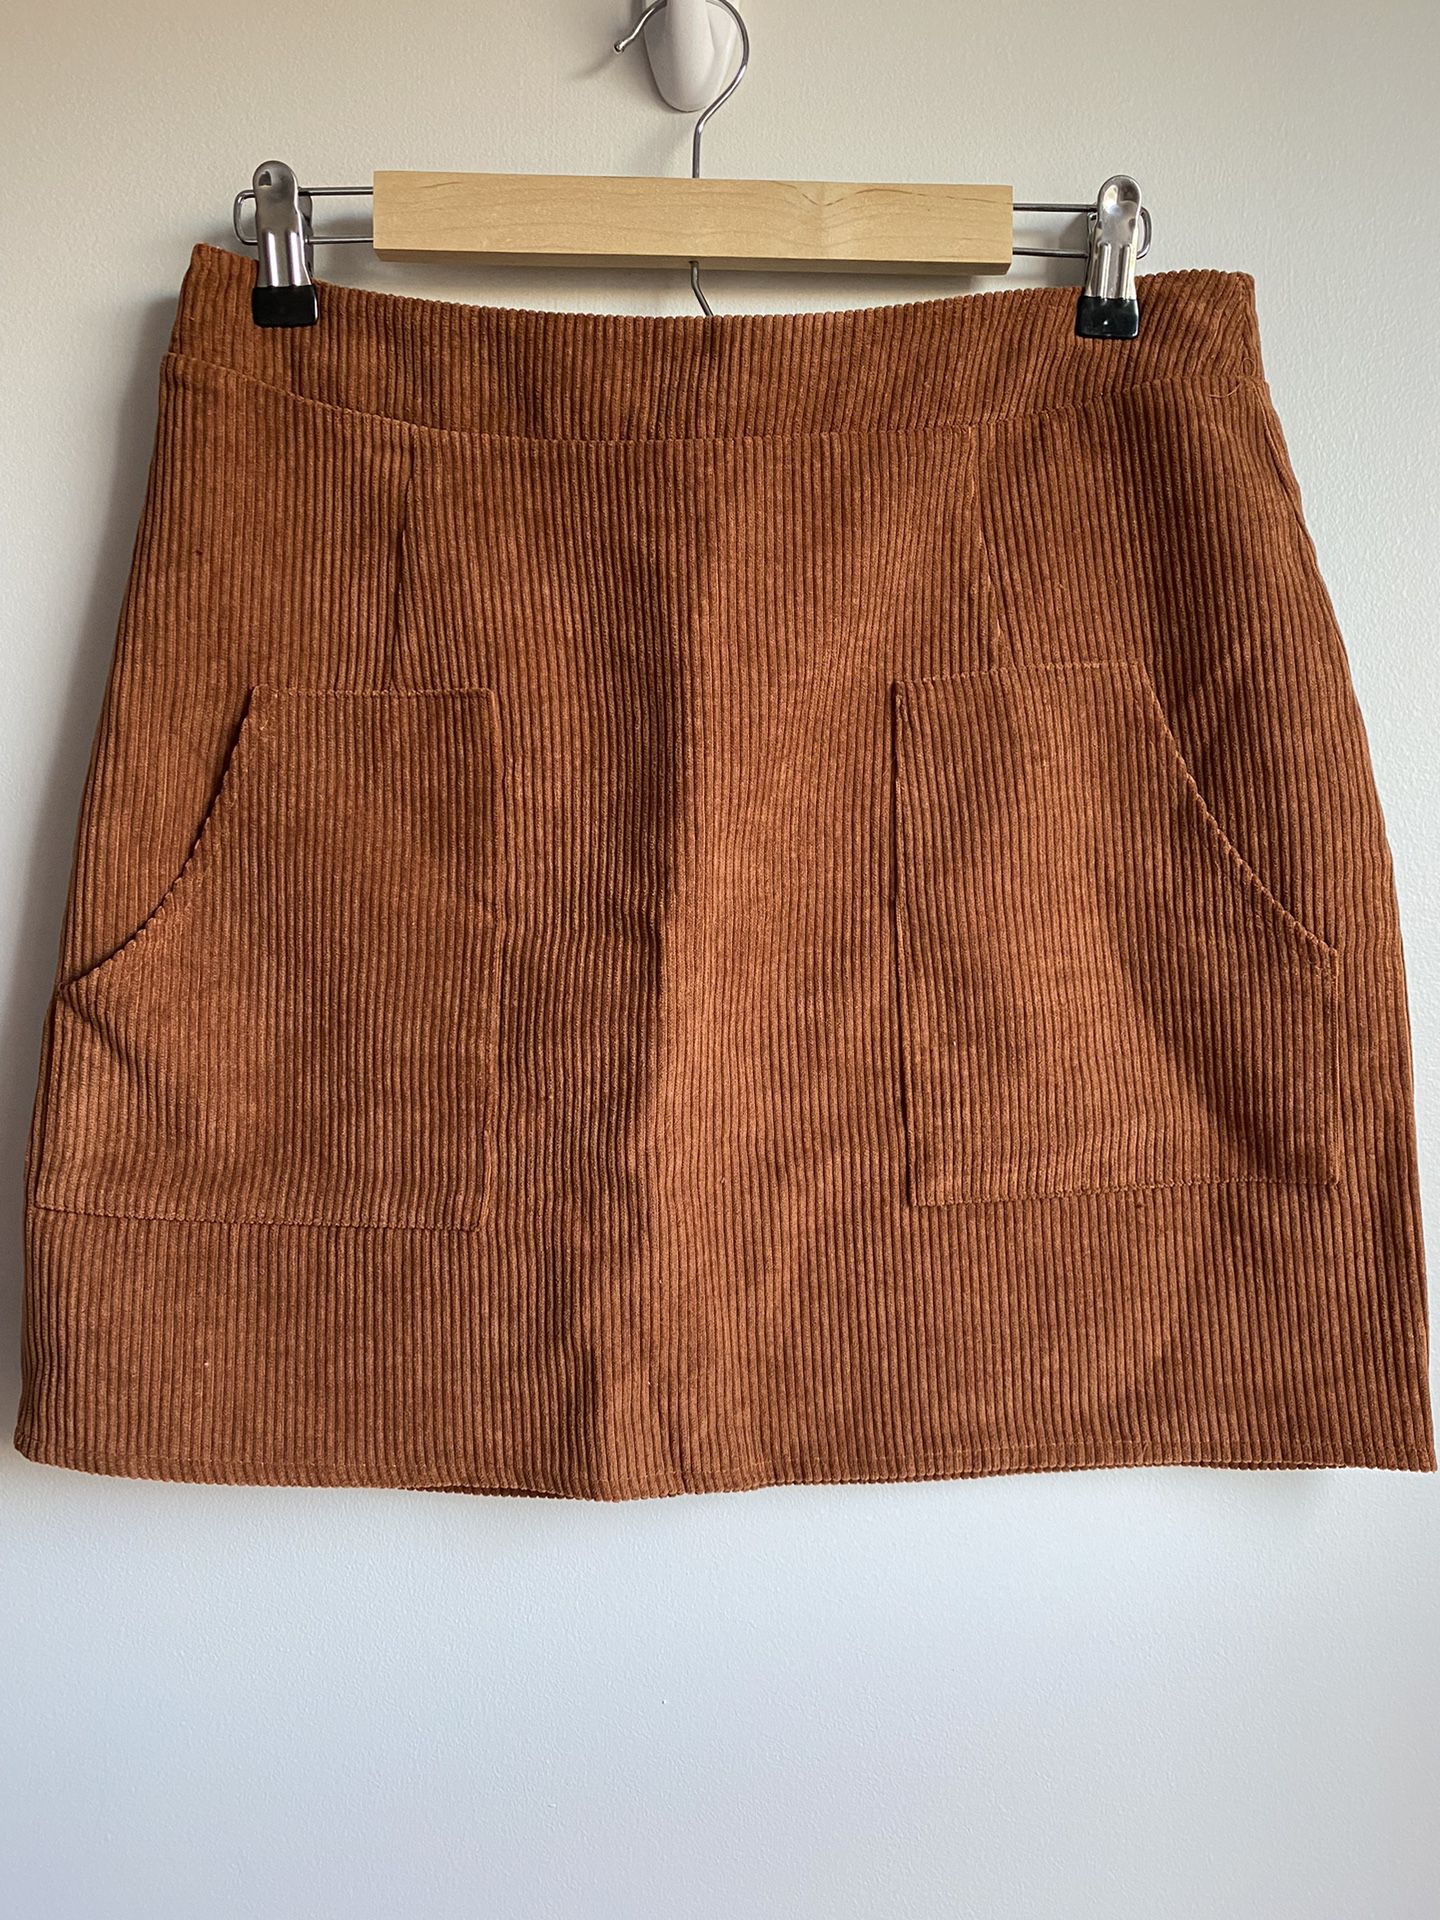 Camel Corduroy Skirt